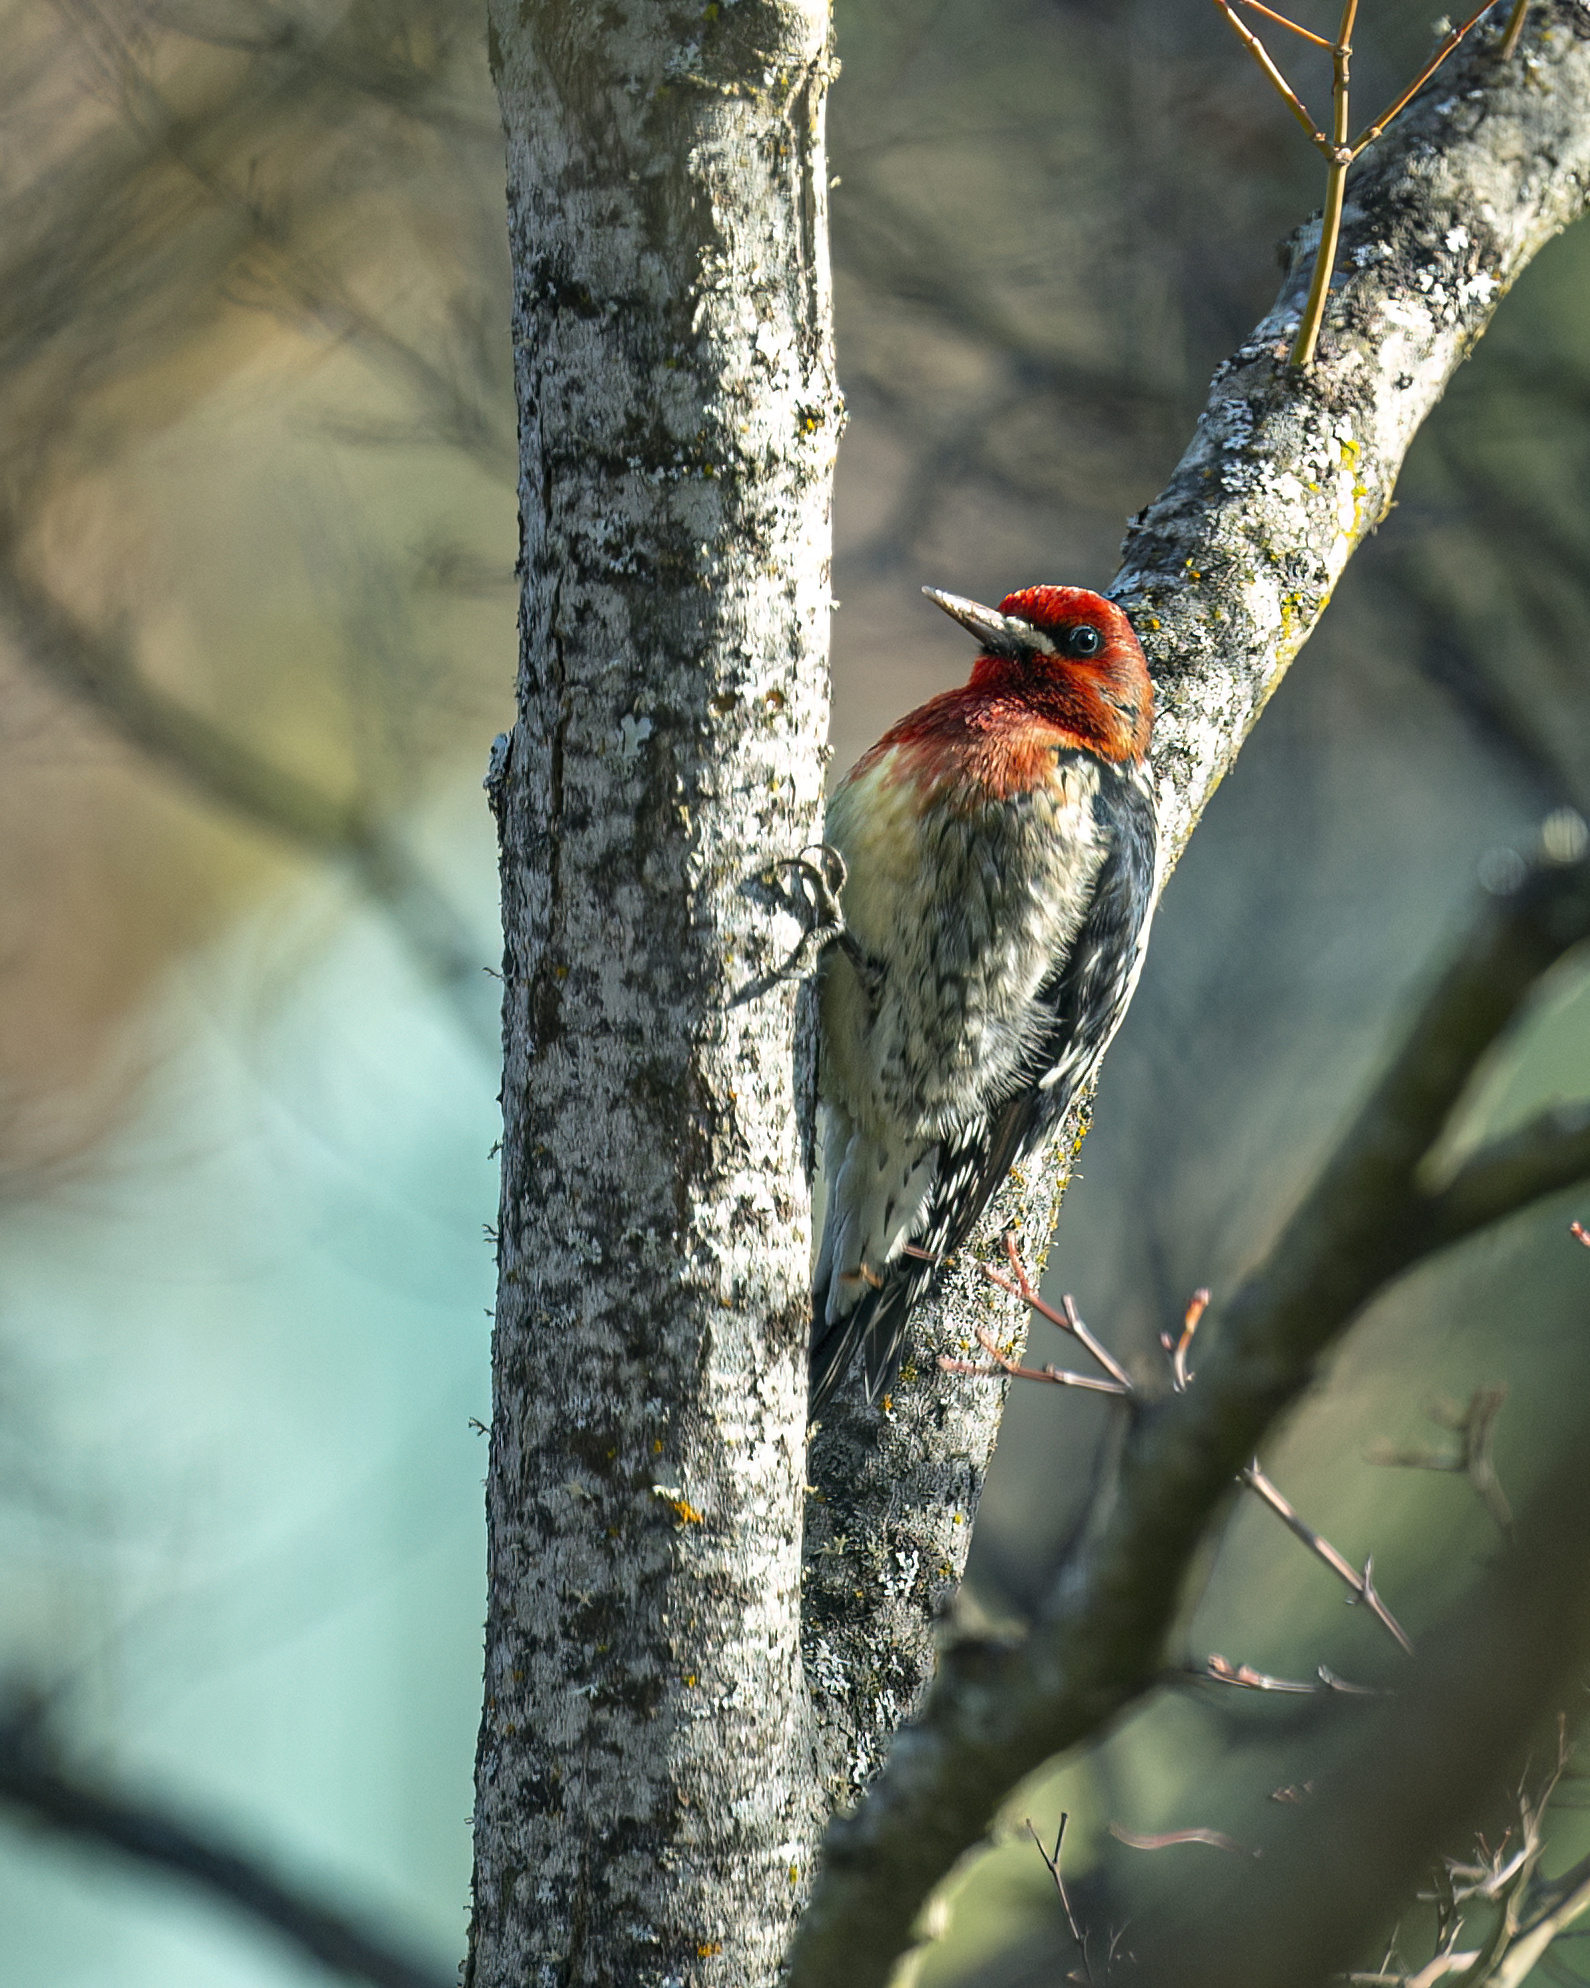 Red-breasted sapsucker ashland oregon wildlife bird-DeNoiseAI-low-light